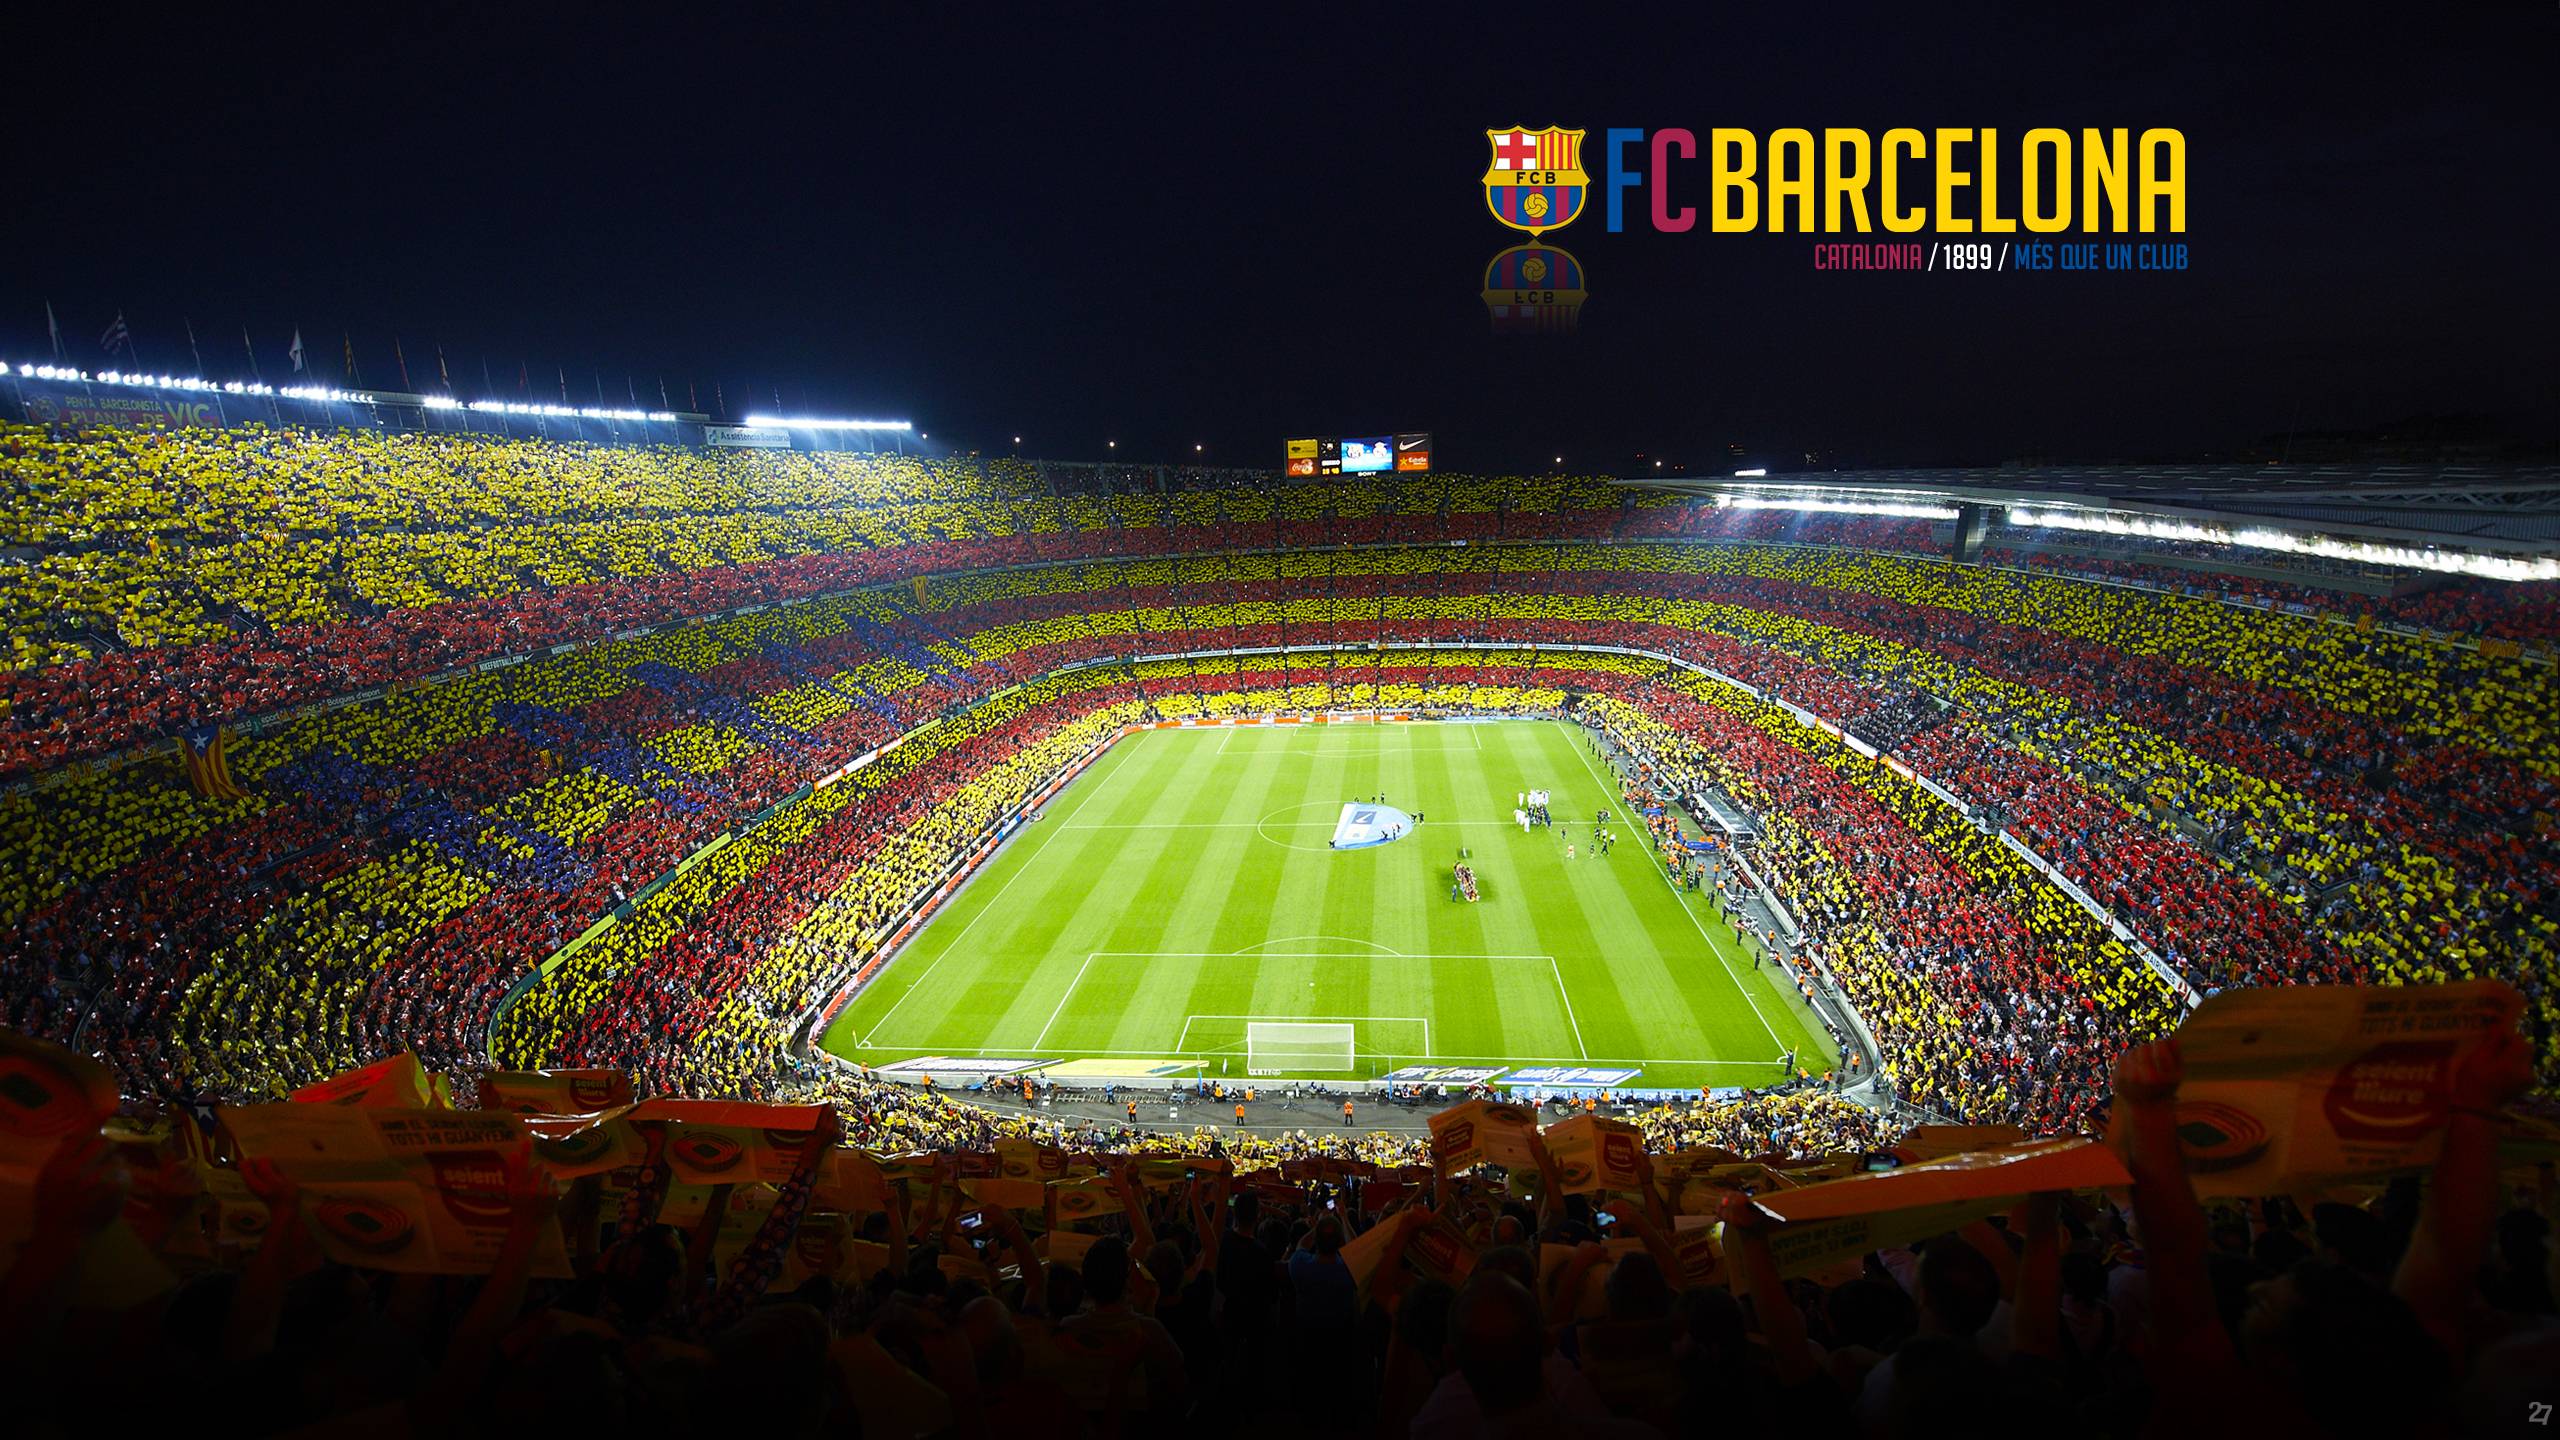 Camp Nou Barcelona Football Blog Wallpapers